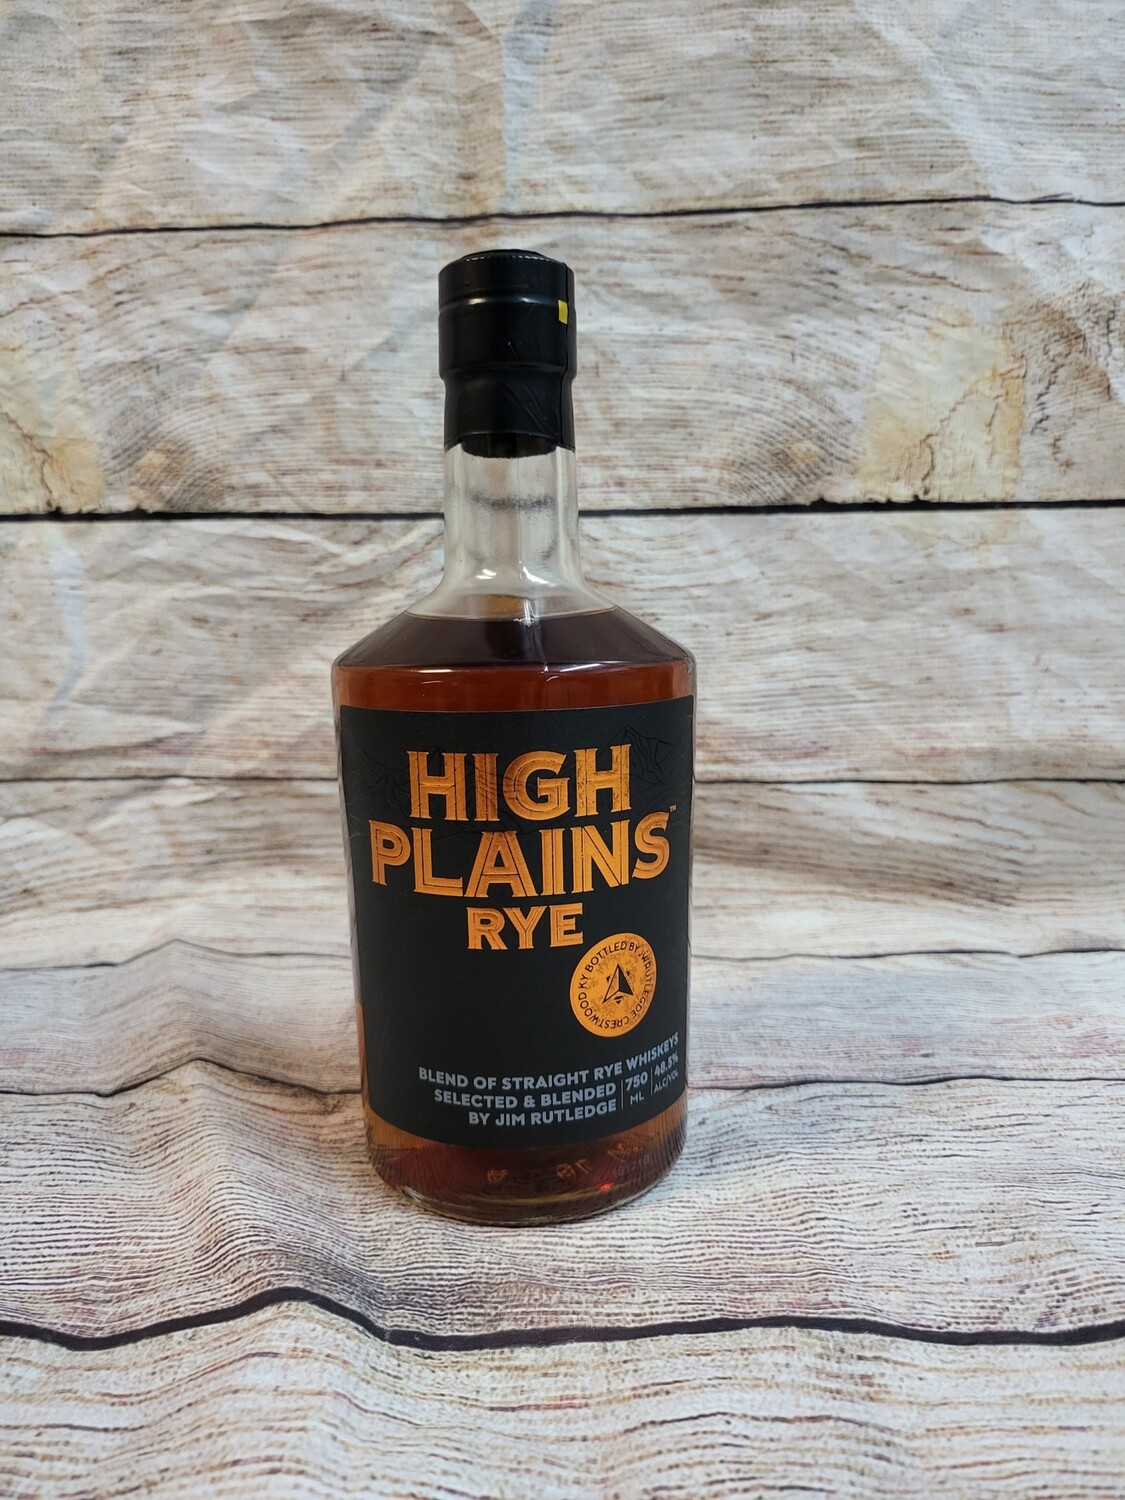 High Plains Rye Whiskey 750ml